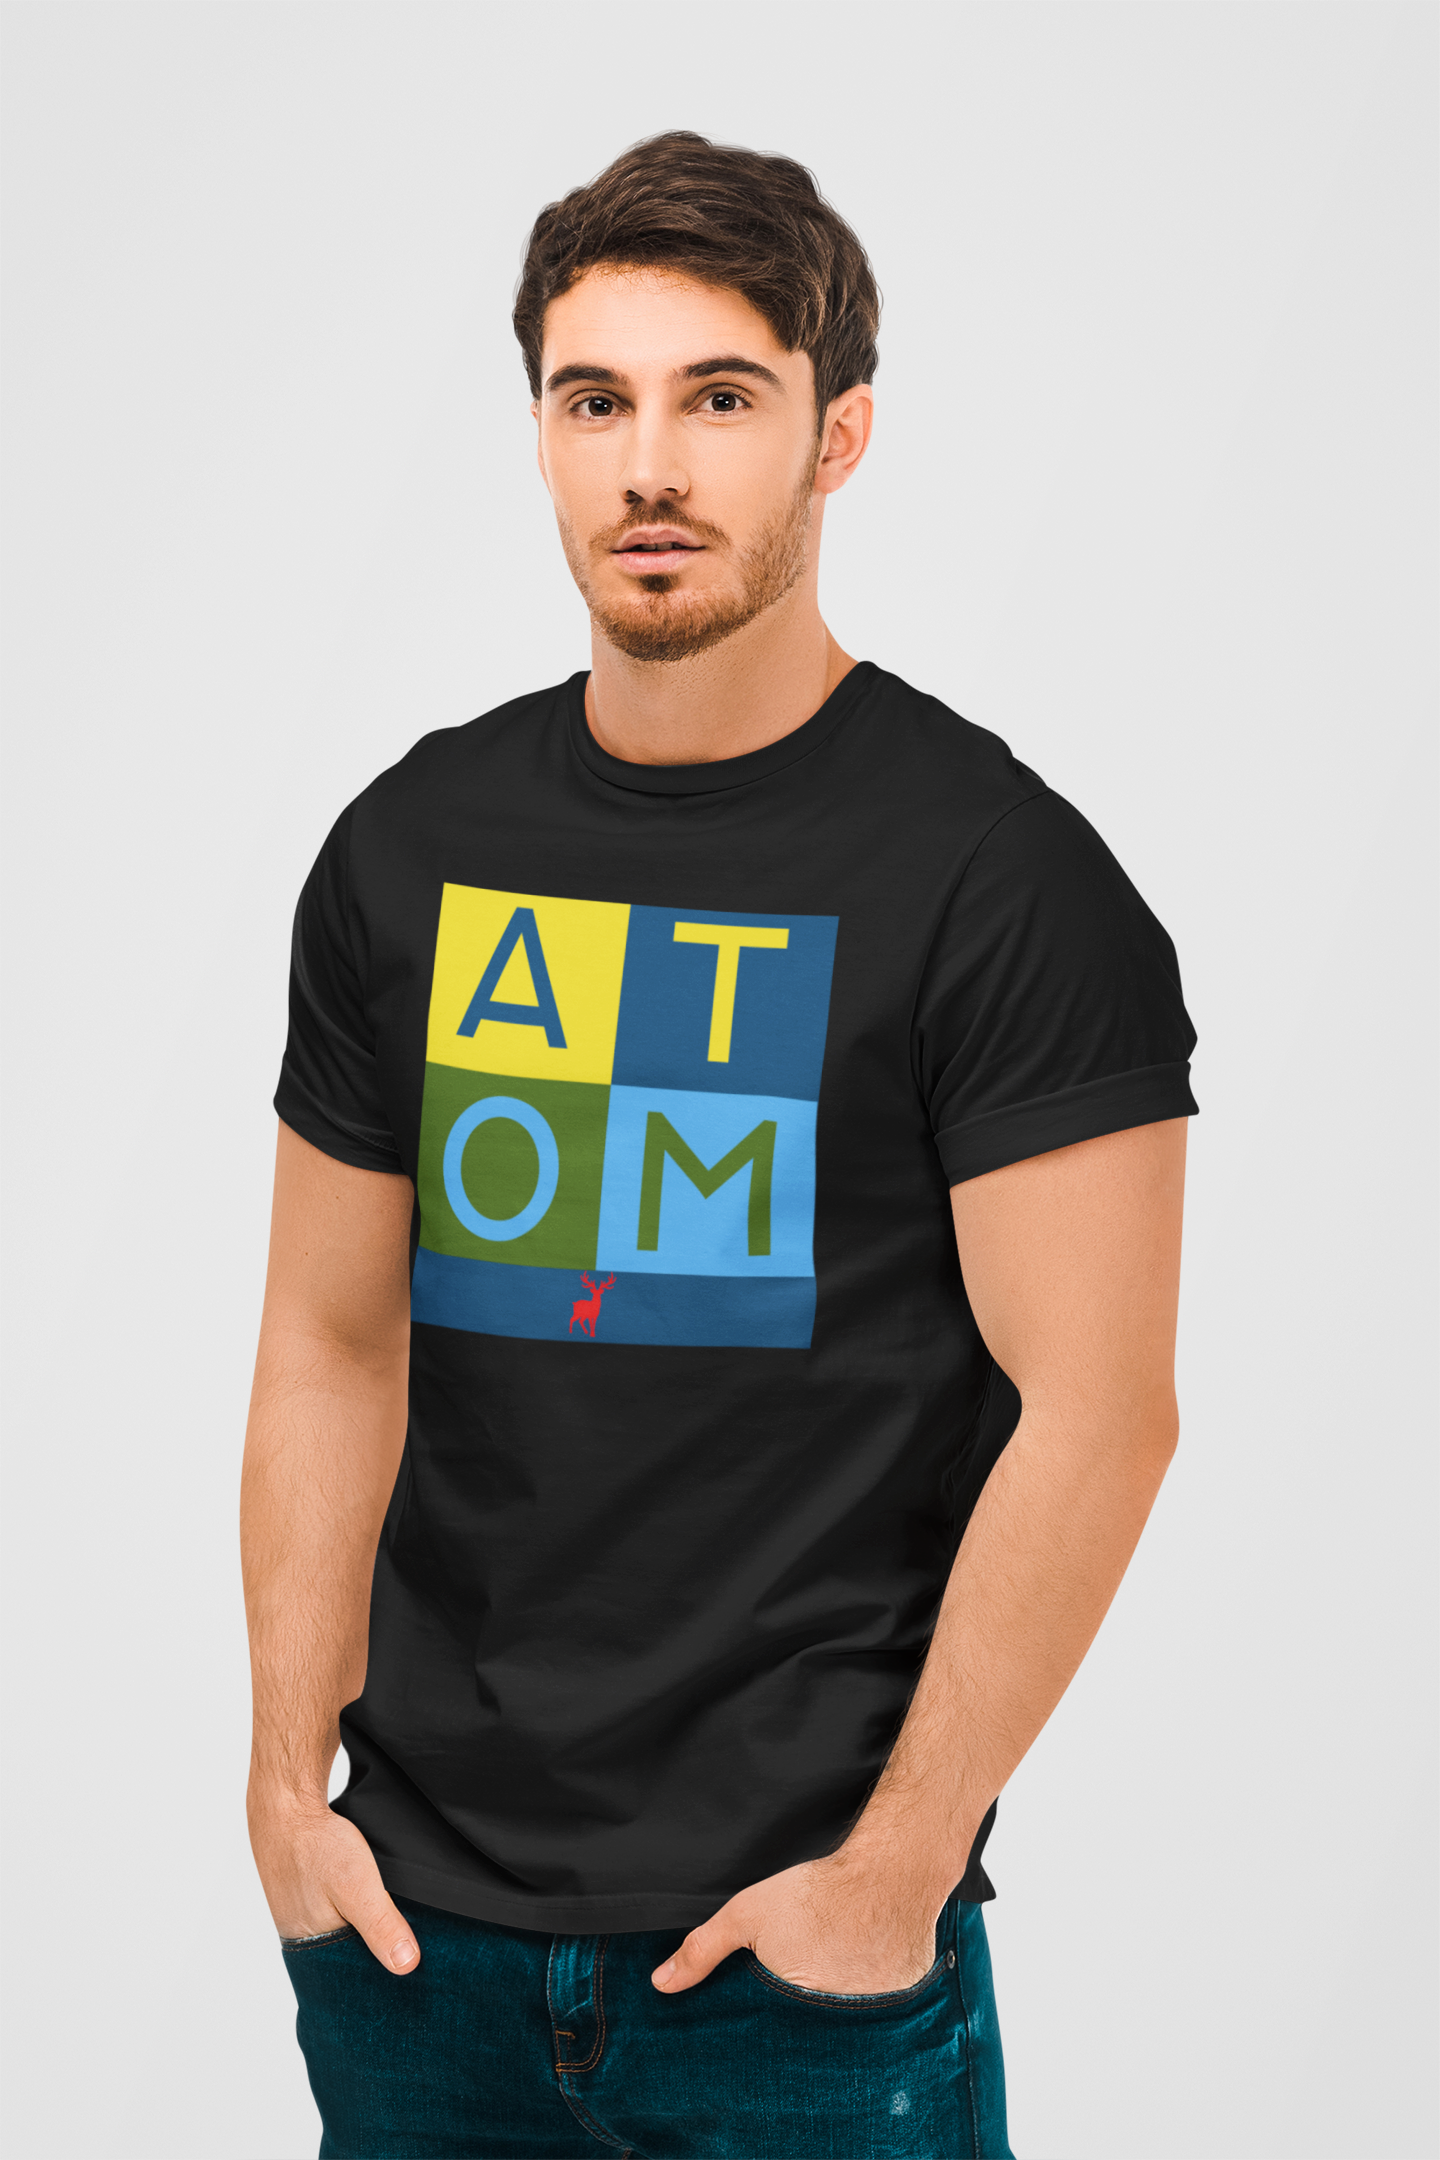 ATOM Signature Color Box Black Round Neck T-Shirt for Men.